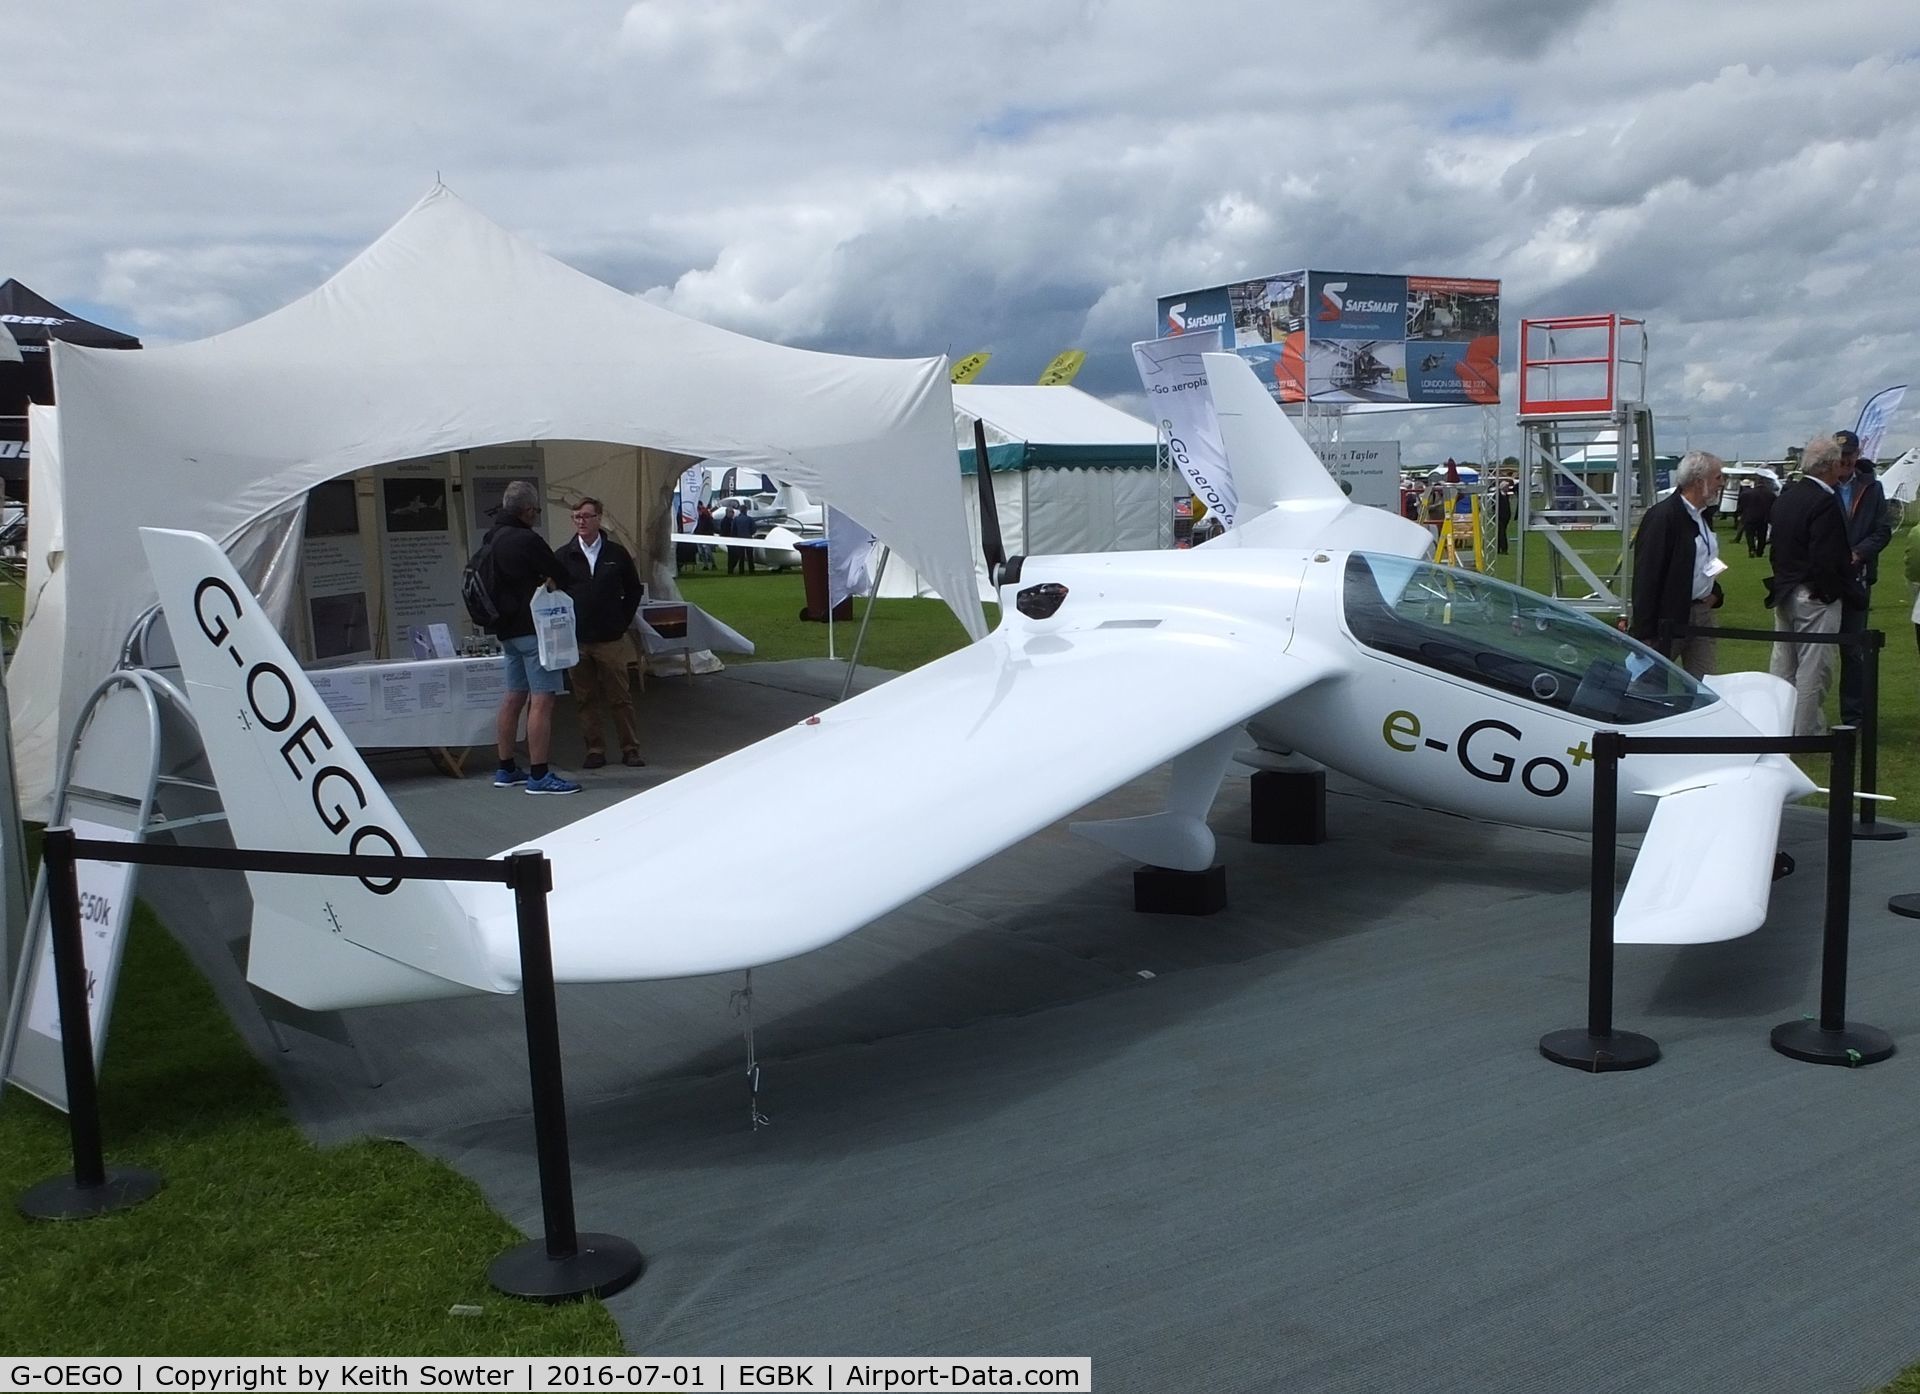 G-OEGO, 2015 e-GO Aeroplanes e-GO C/N SS002, on static display